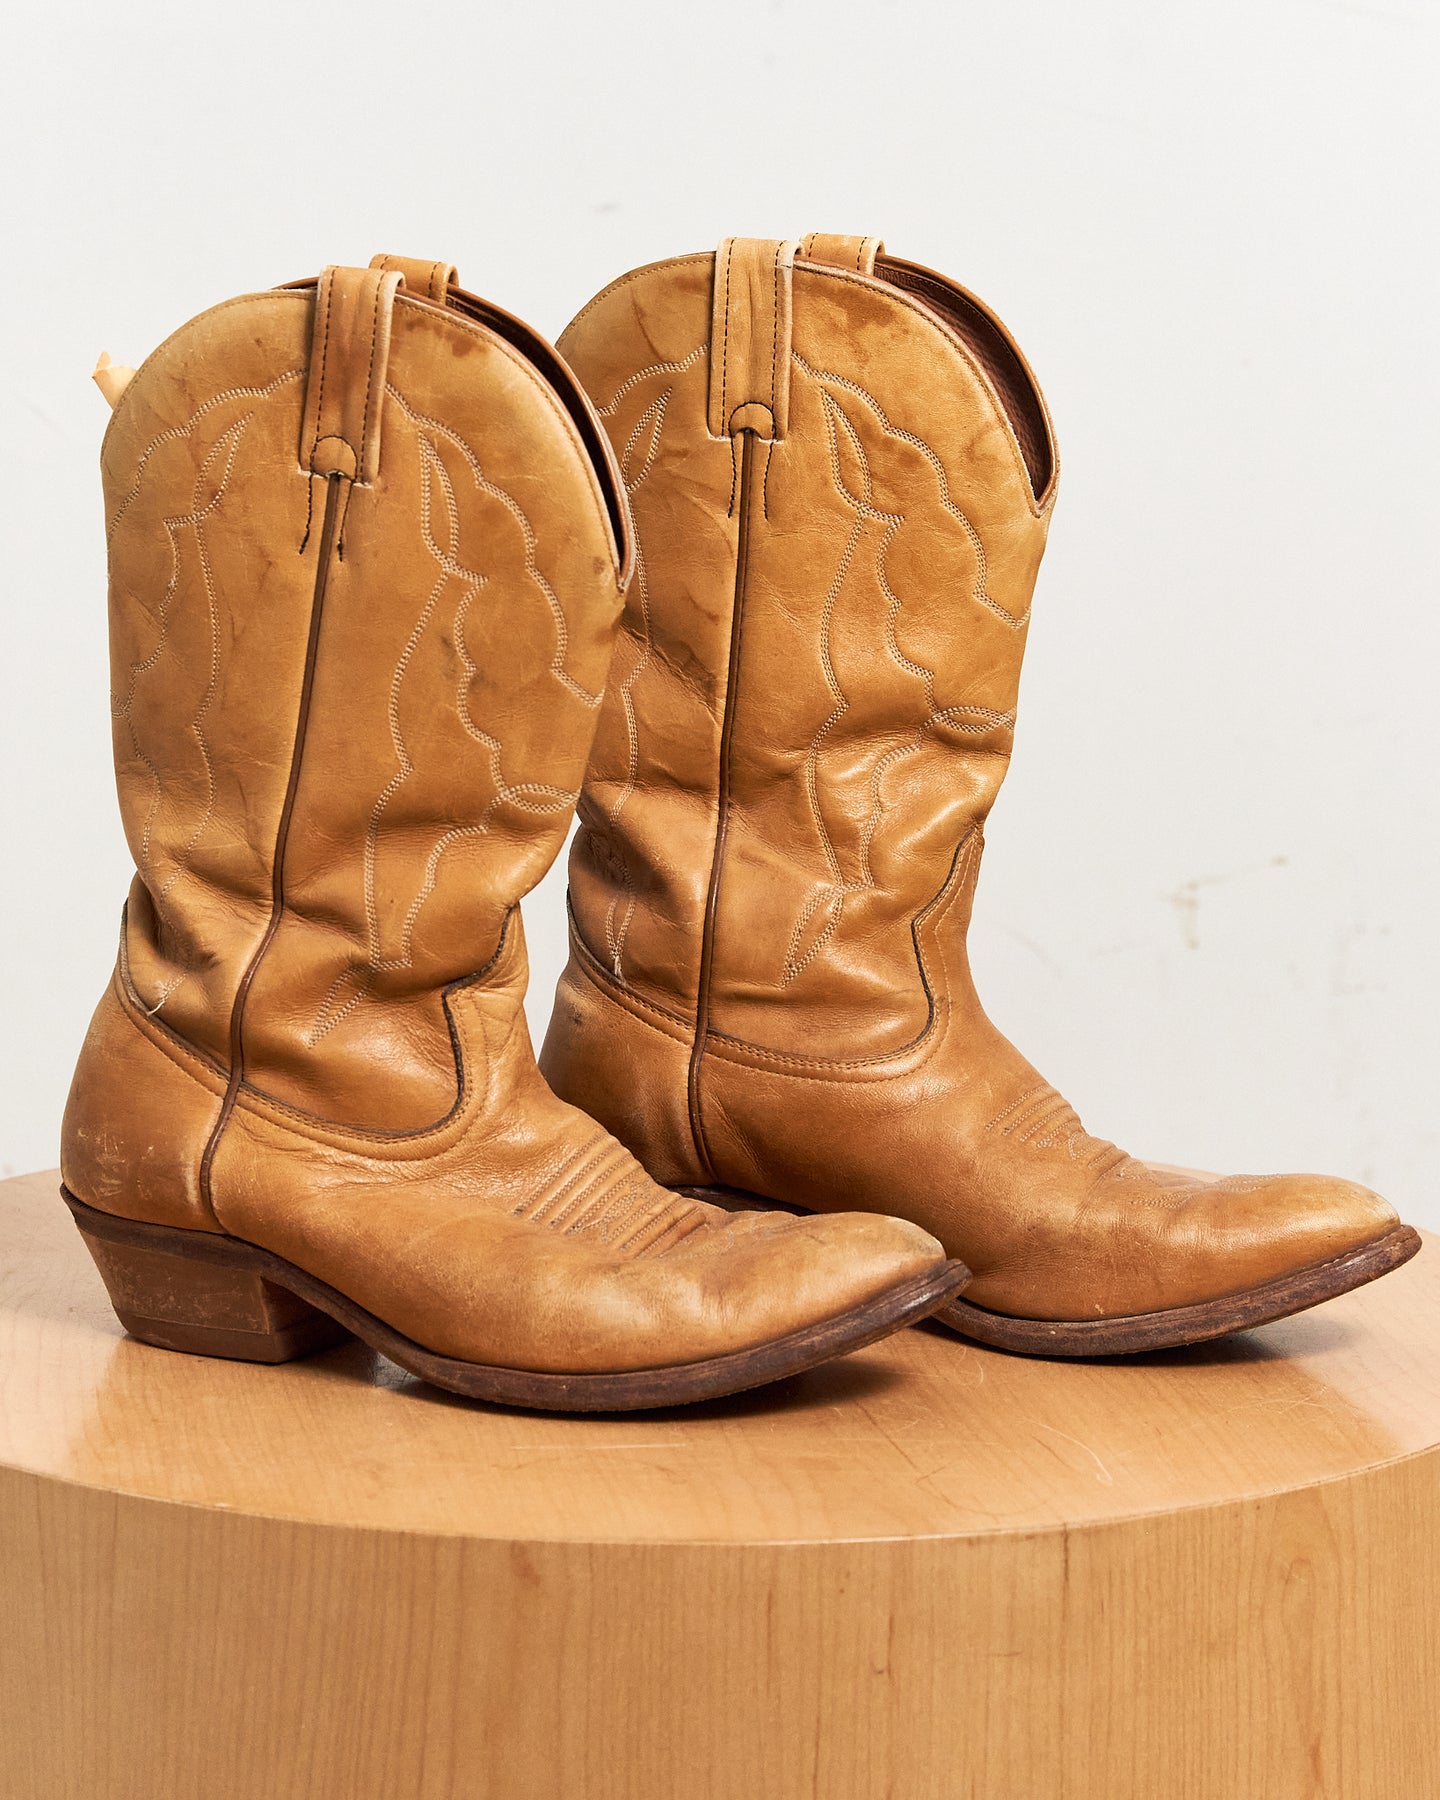 Cowboy Boots - Tall Light Tan Size 9.5